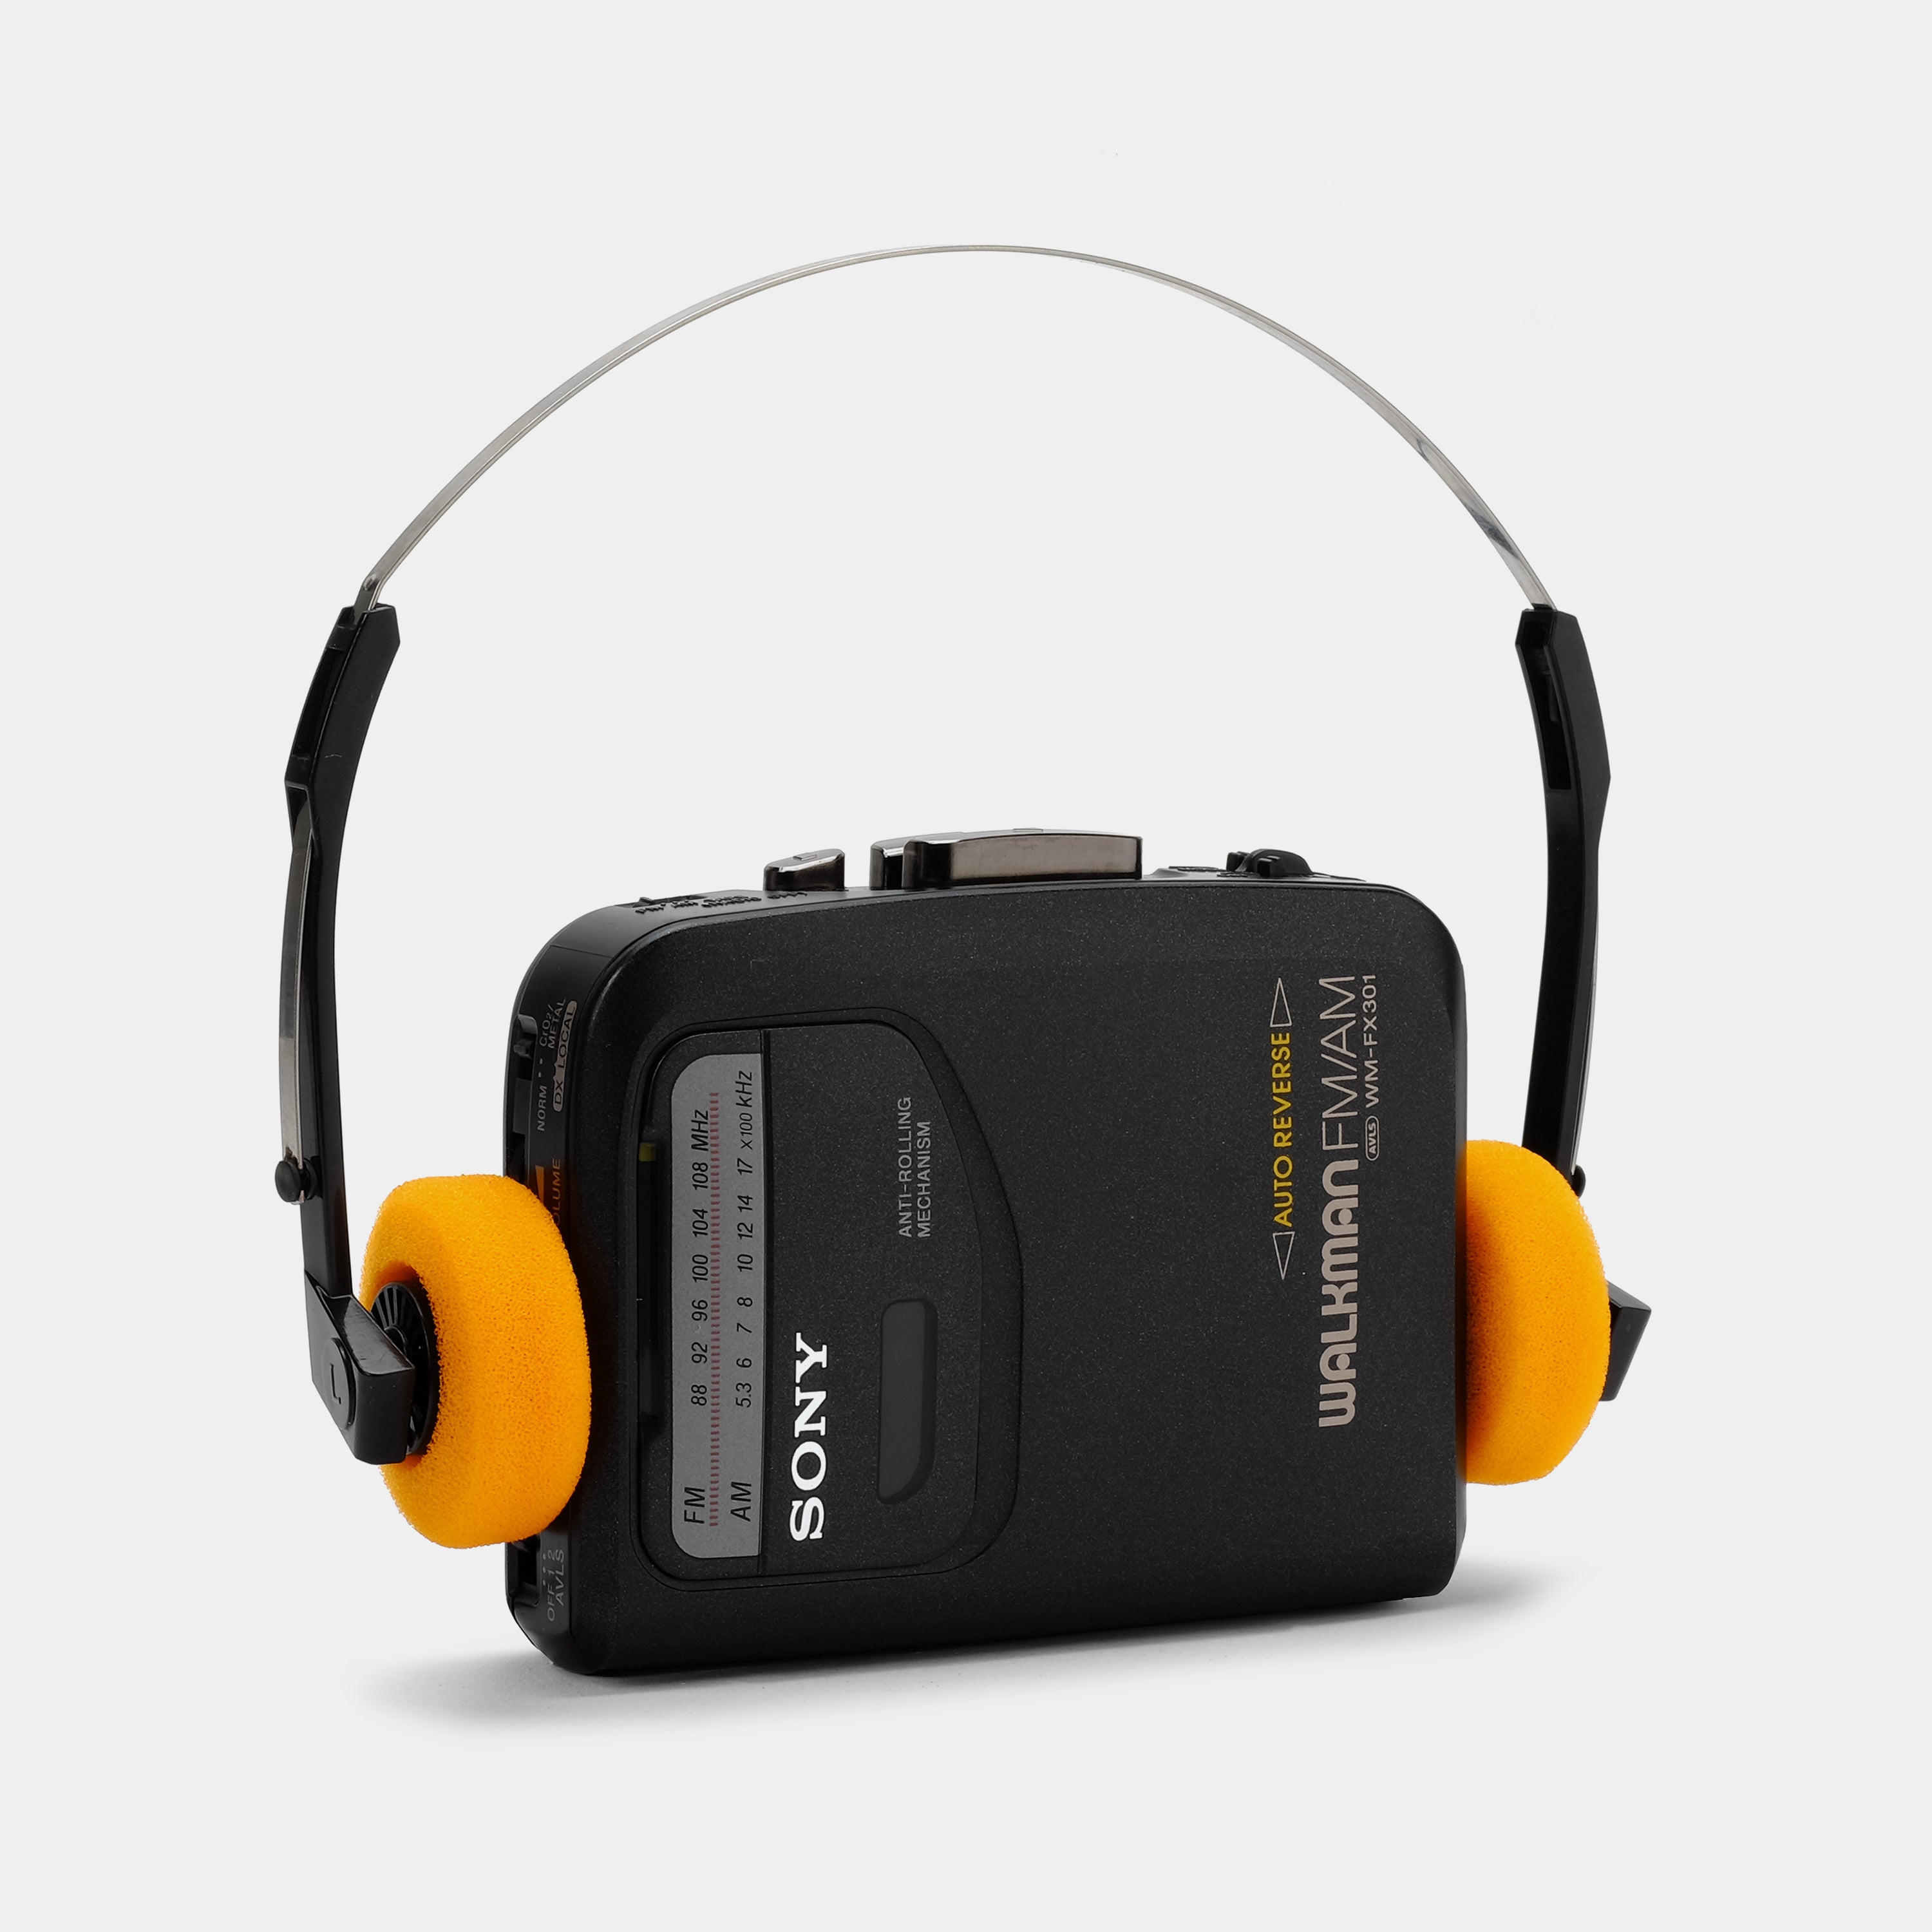 Sony Walkman WM-FX301 Auto Reverse AM/FM Portable Cassette Player